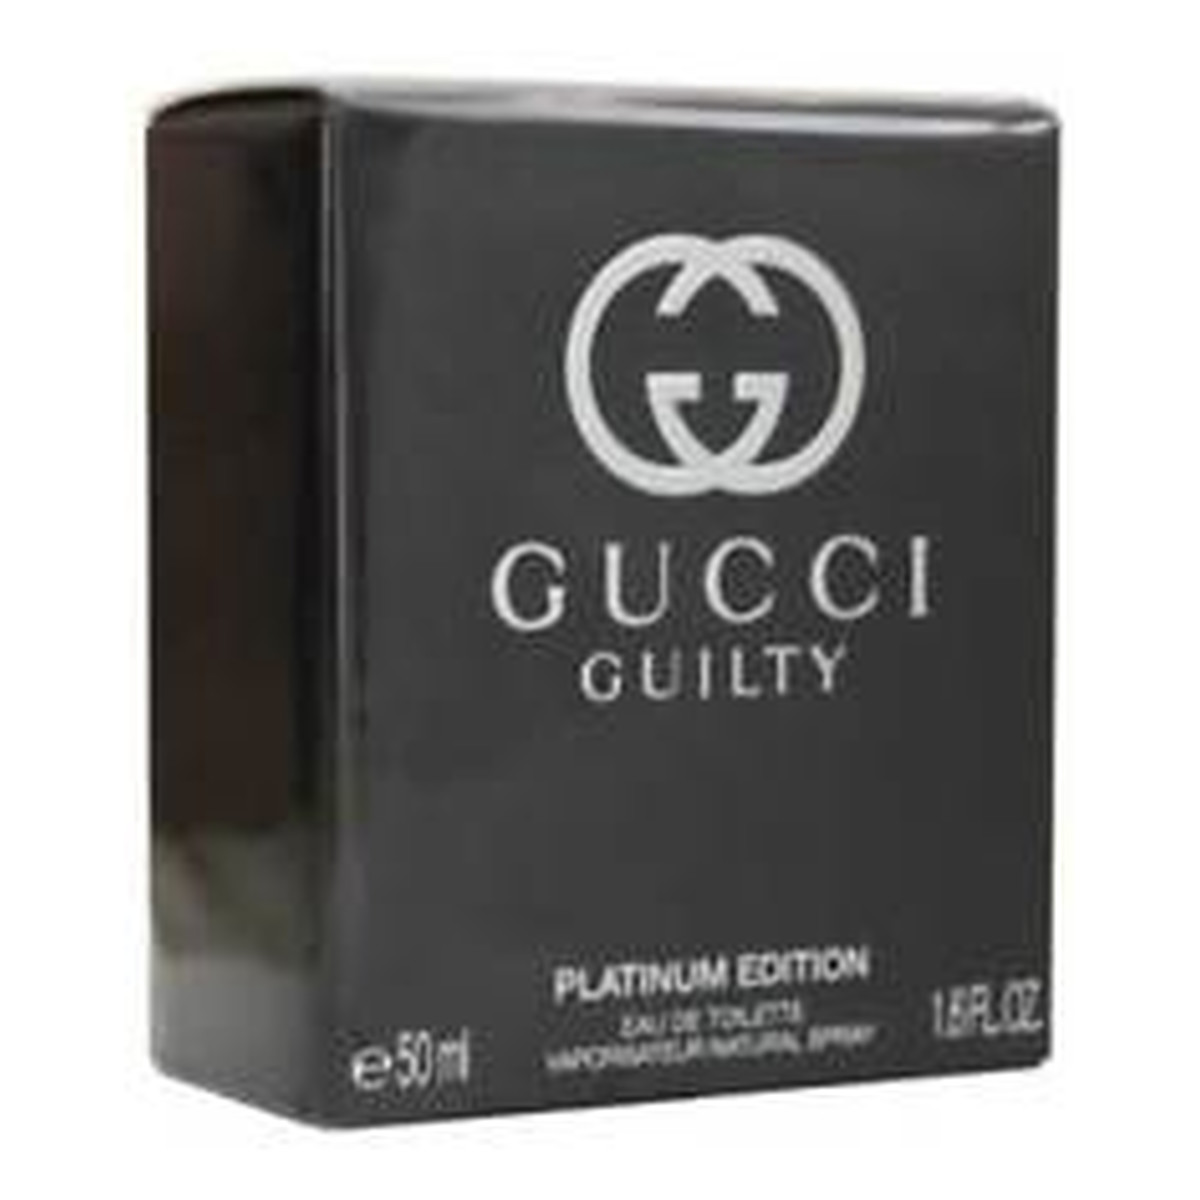 Gucci Guilty Platinum Edition woda toaletowa spray 50ml